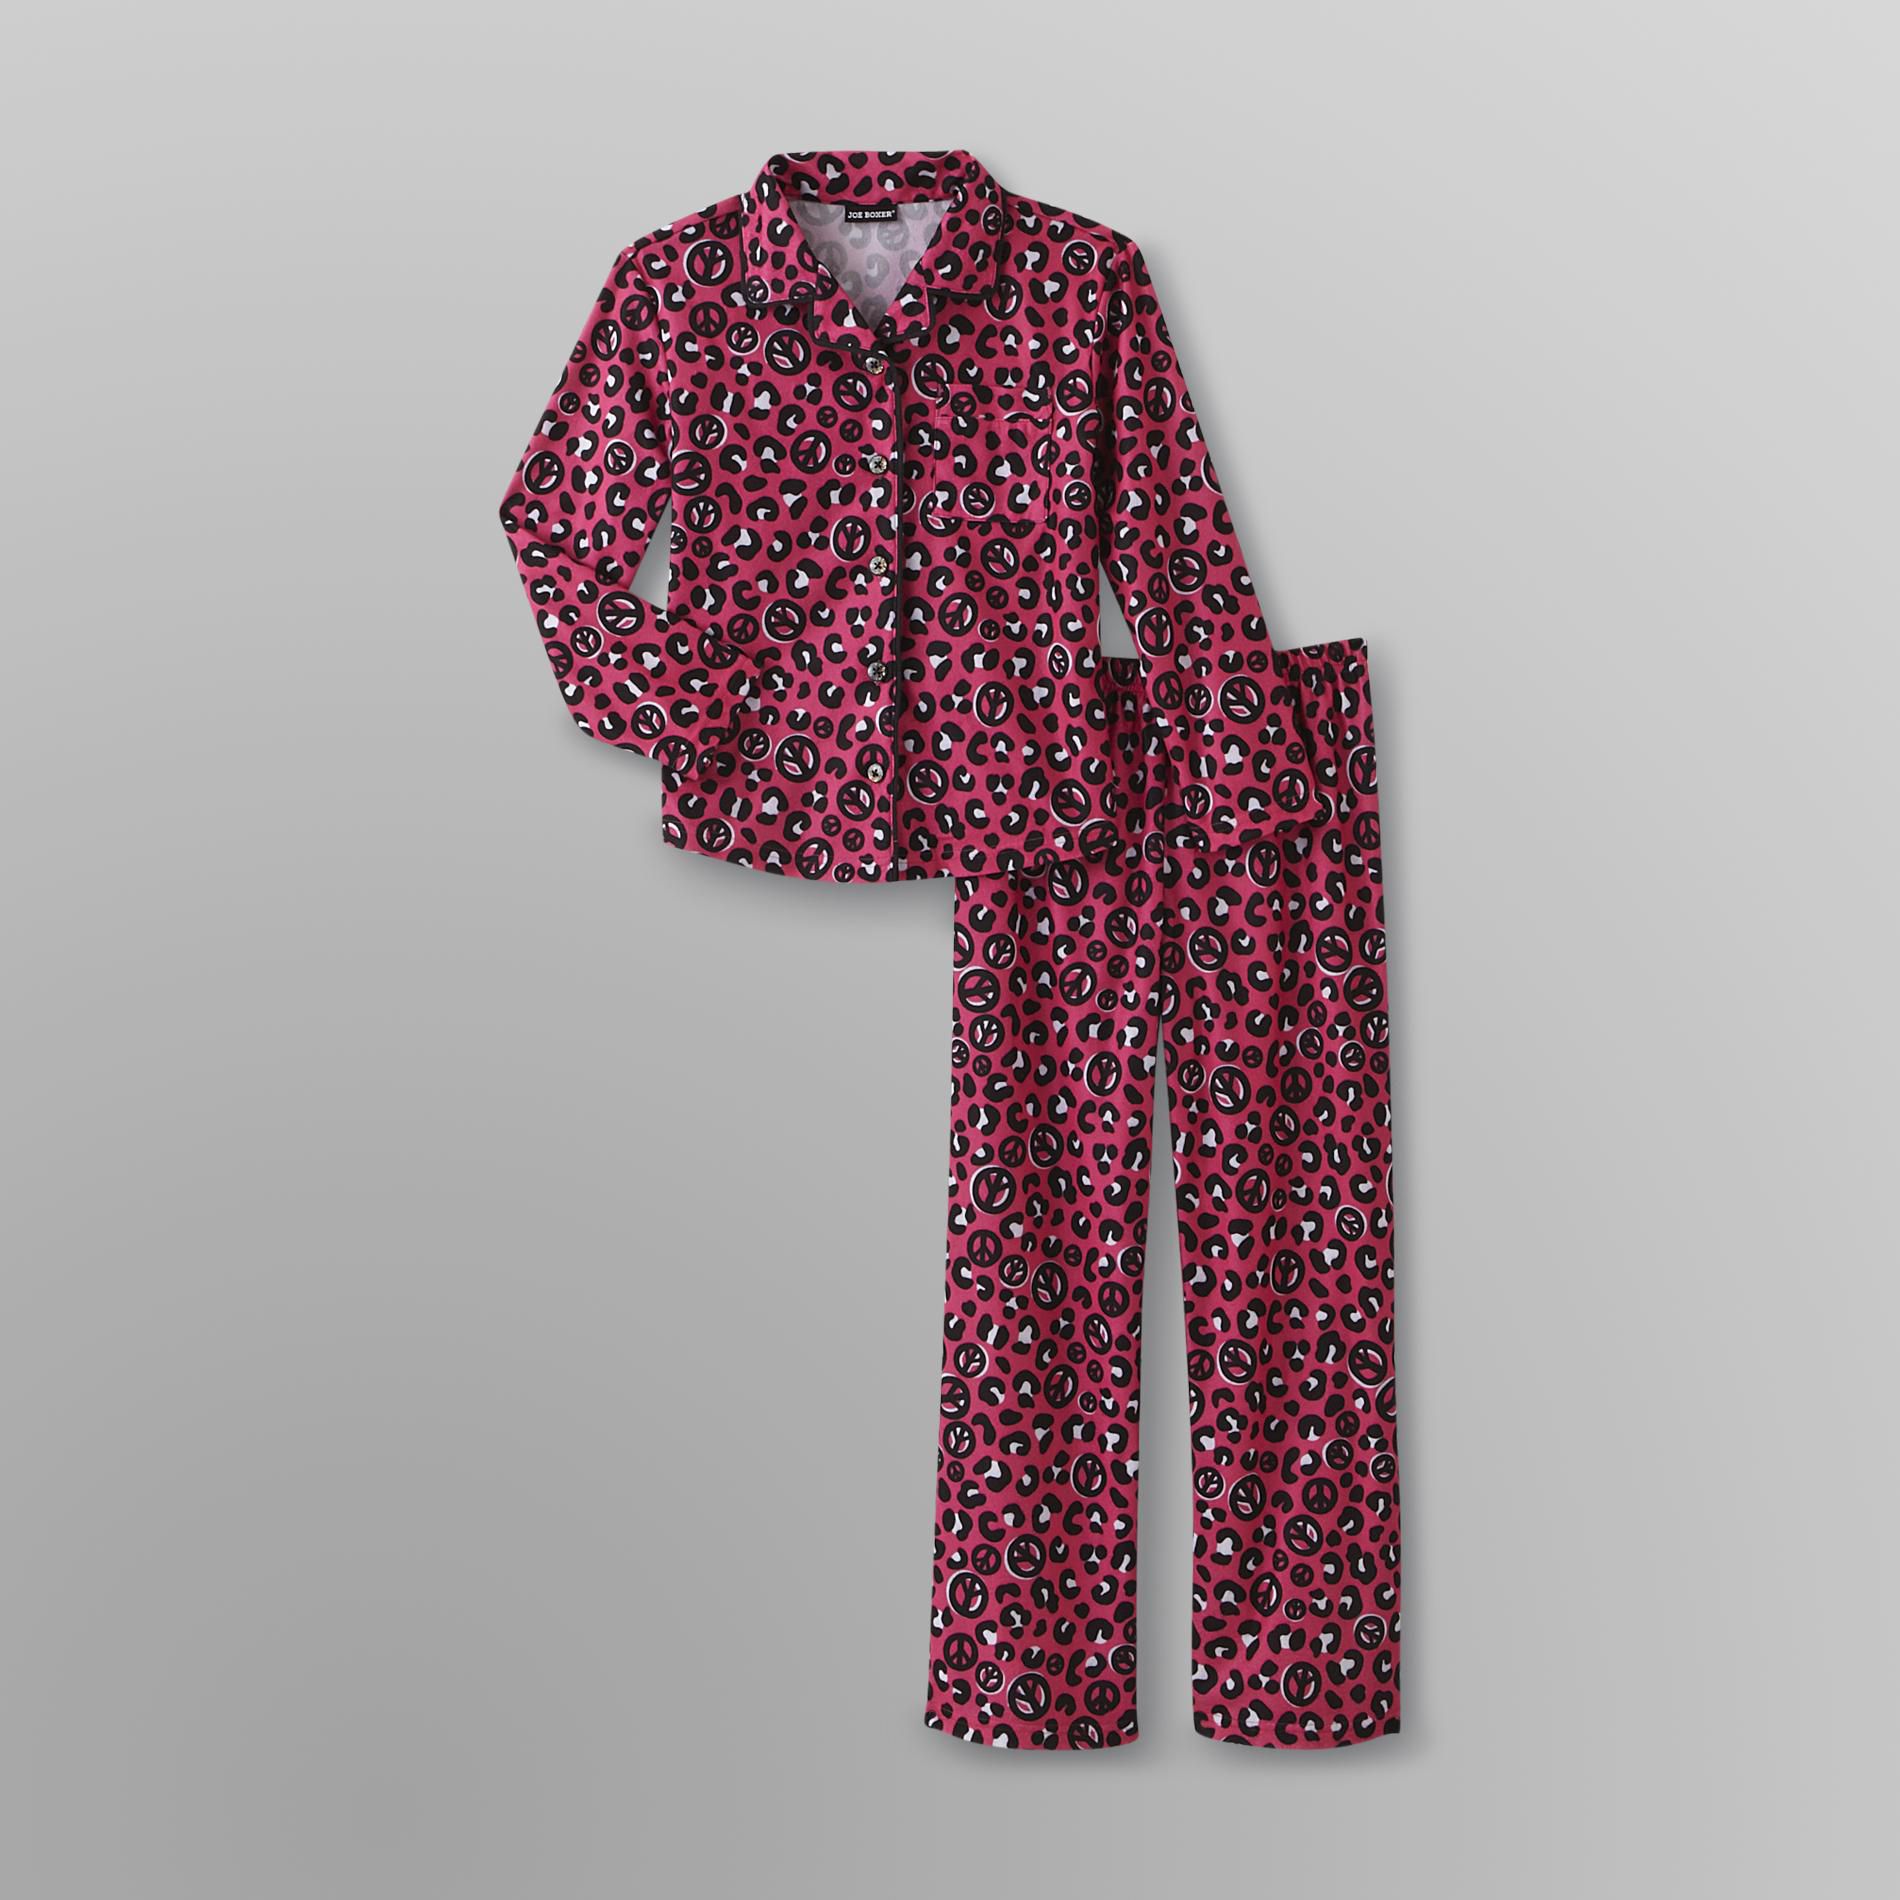 Joe Boxer Girl's Flannel Pajamas - Leopard Peace Signs